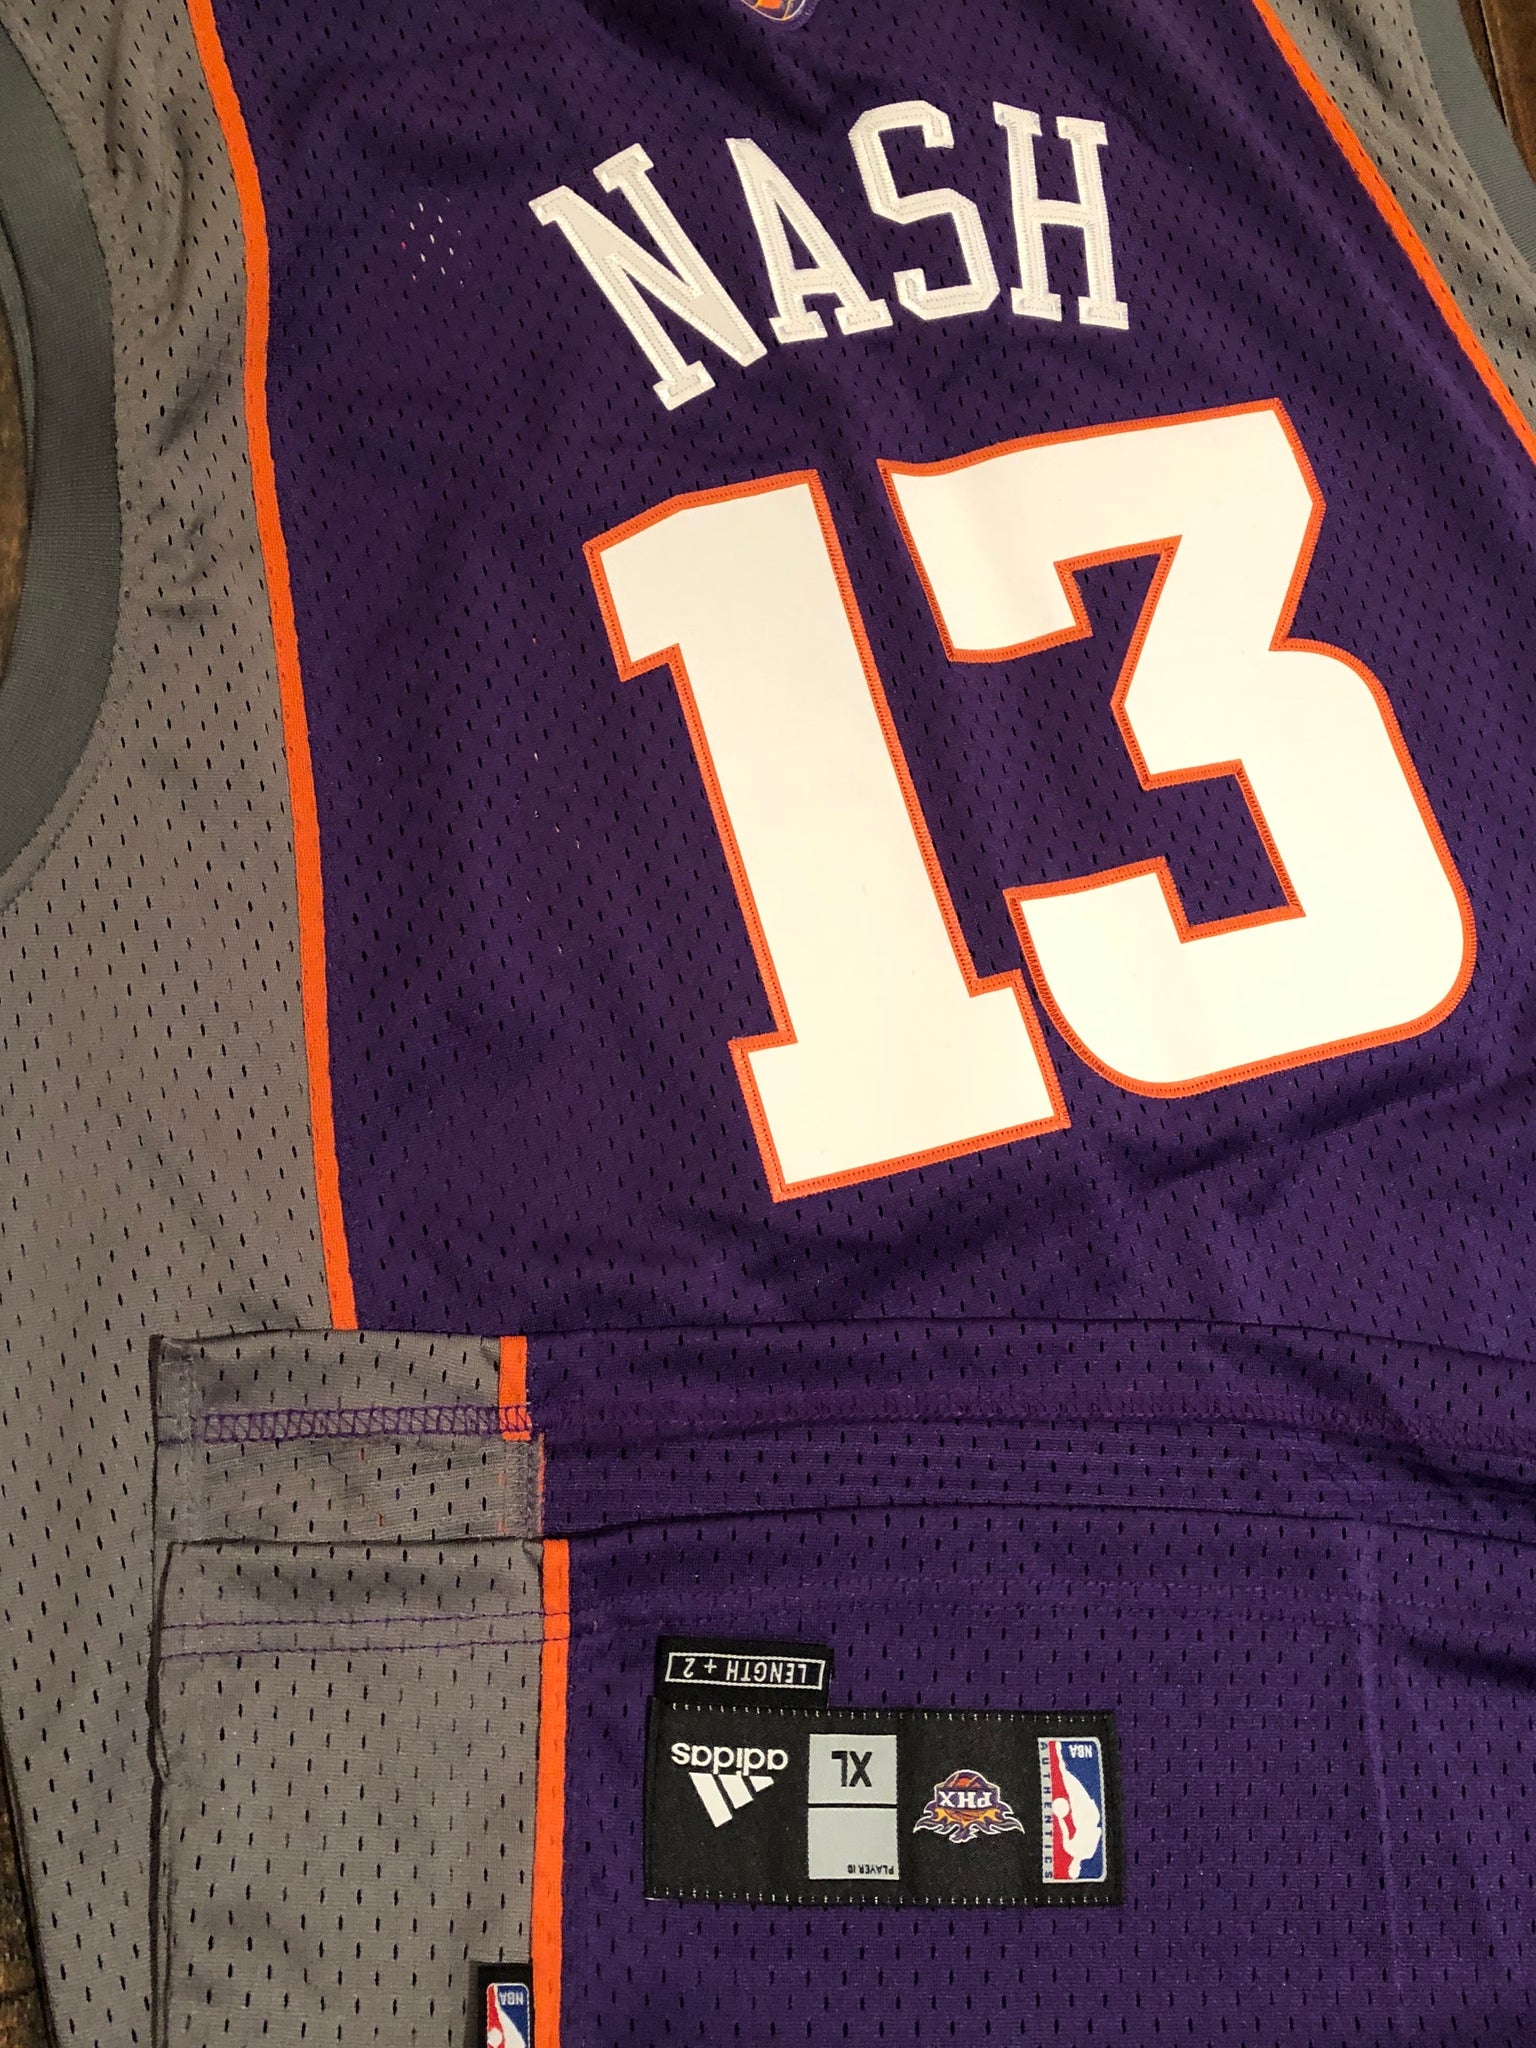 Steve Nash Phoenix Suns Adidas Purple/Gray Sewn Jersey Men's Size M Length+2